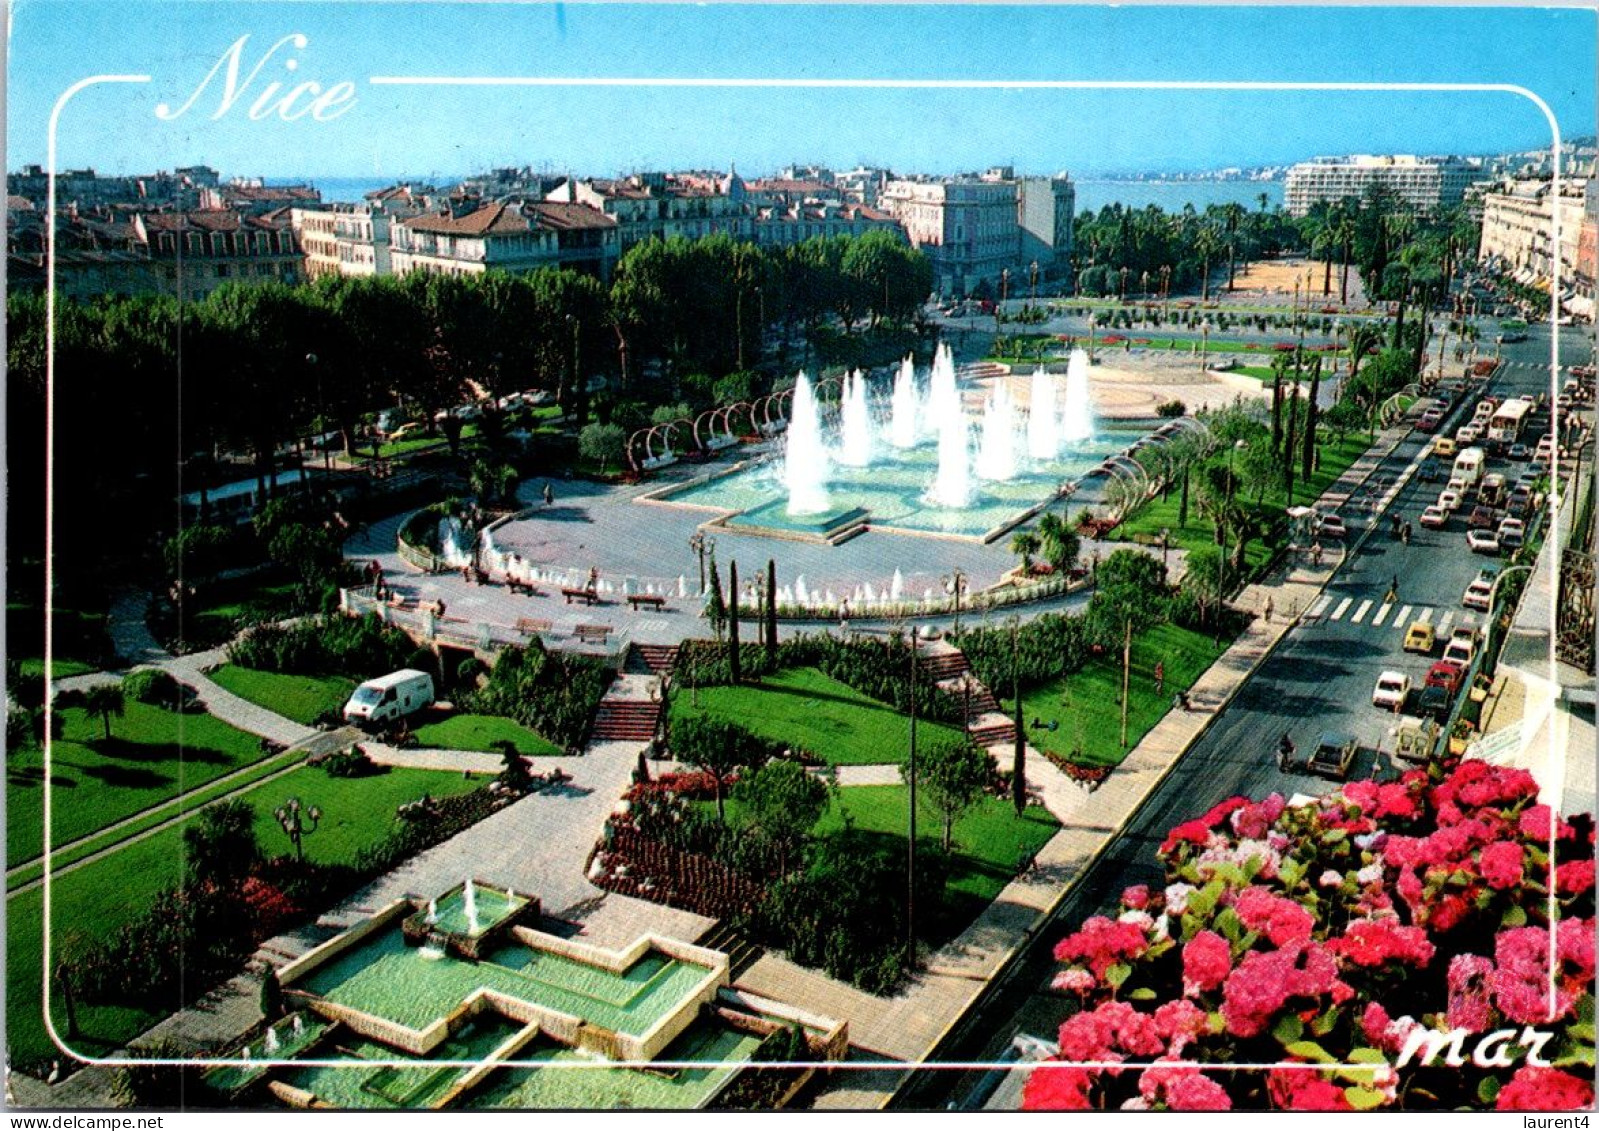 2-5-2024 (3 Z 40) France - Nice (posted In 1996 With Santons De Provence Stamp) - Parks, Gärten